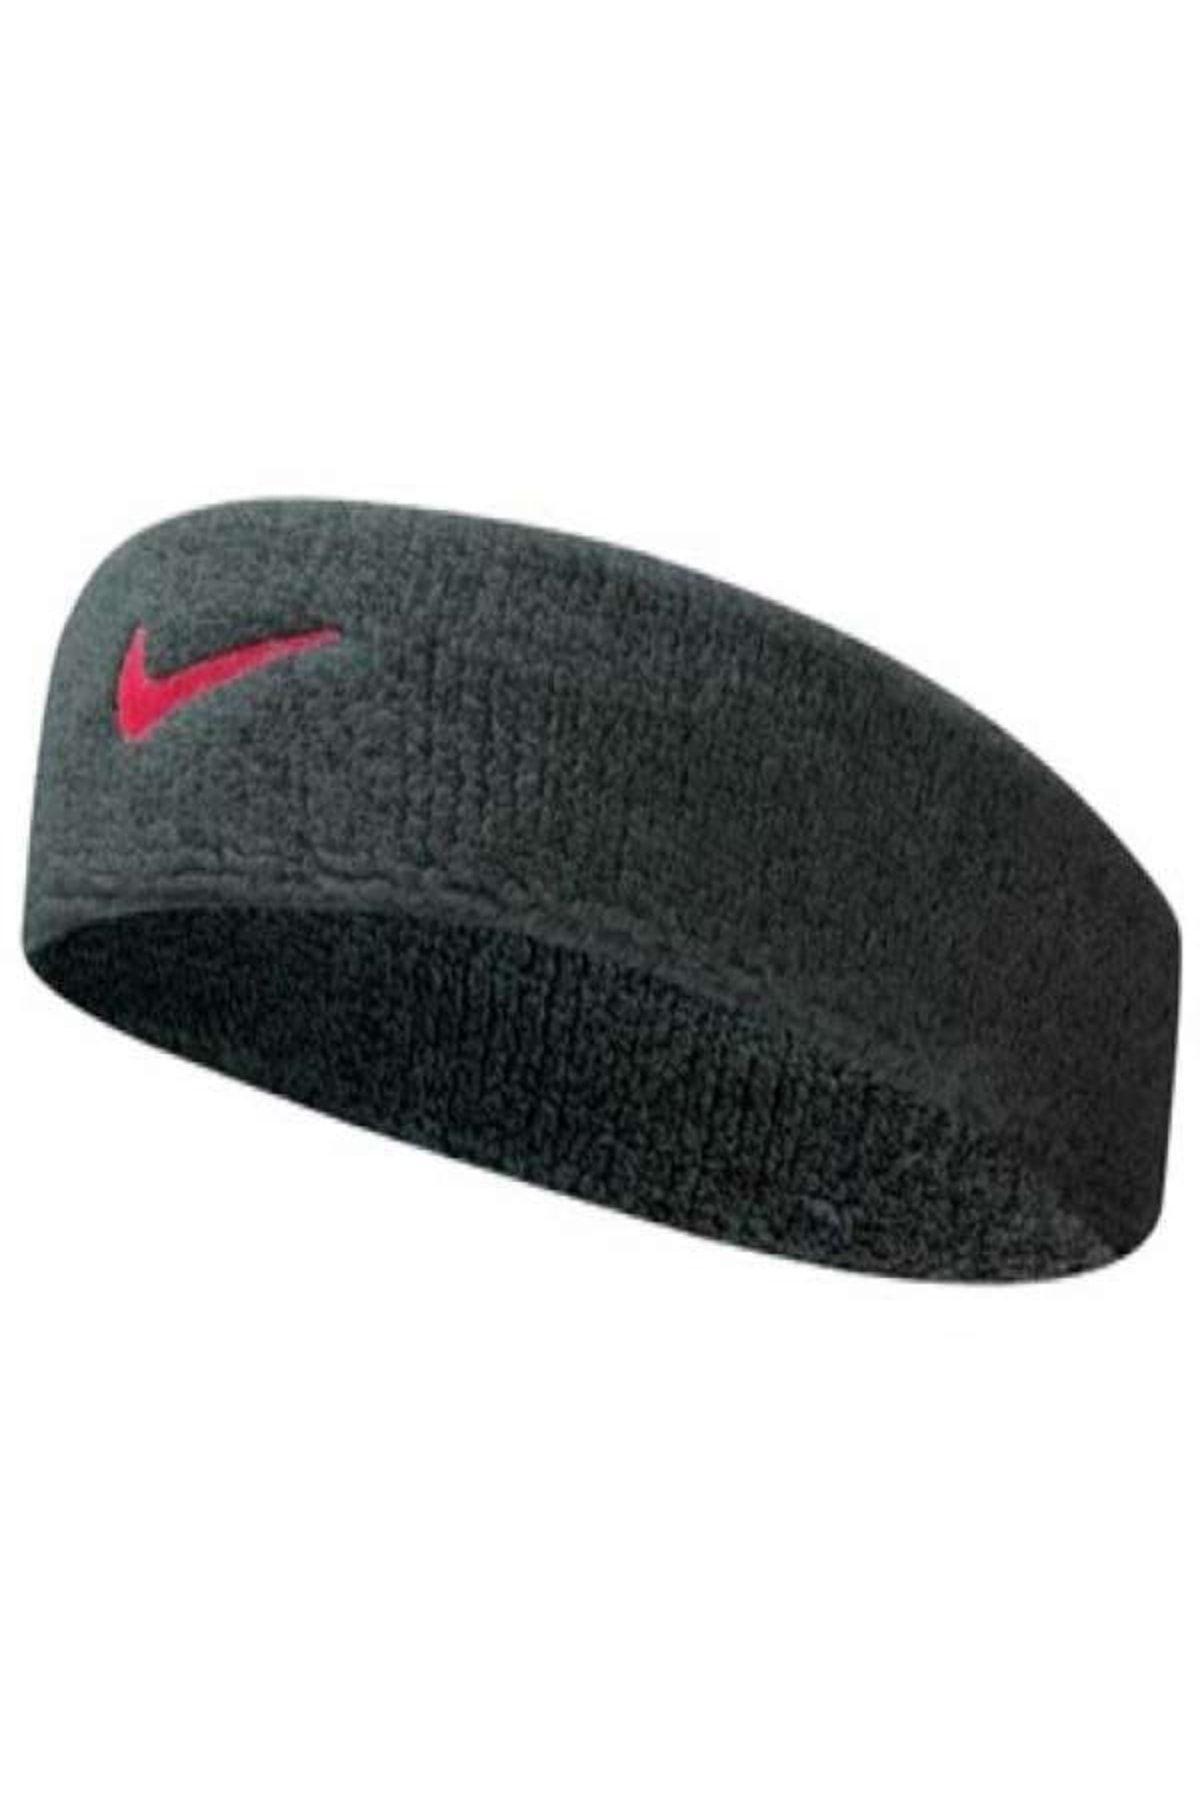 Nike Swoosh Headband Havlu Kafa Bandı Antrasit N.nnn.07.065.os